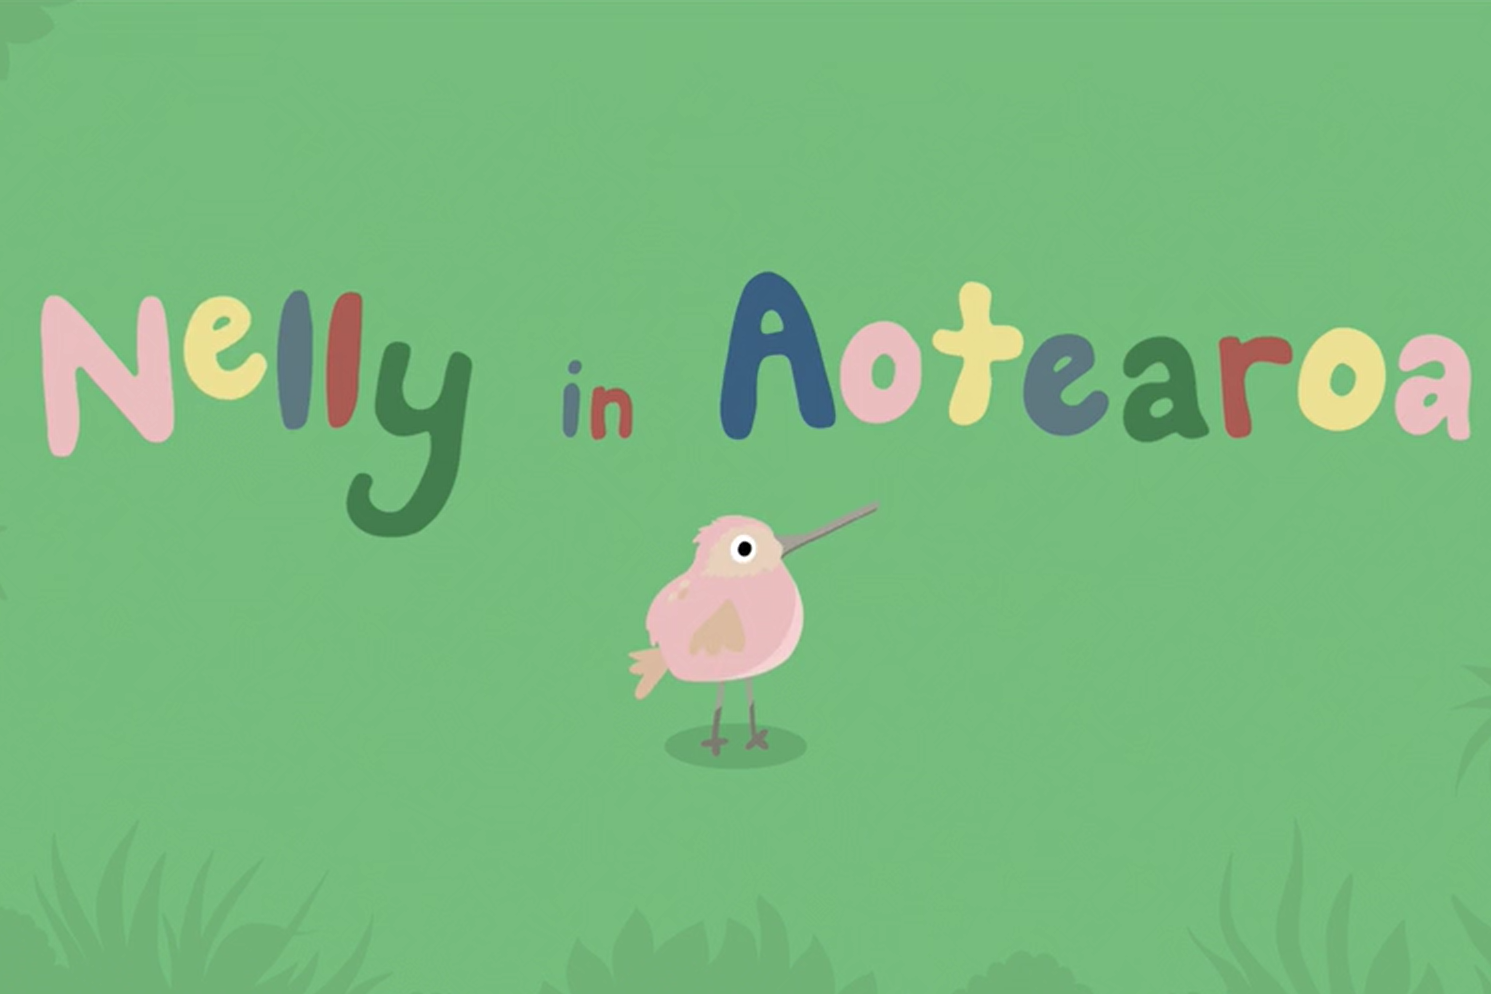 'Nelly in Aotearoa' titled alongside a cartoon drawing of a kiwi.